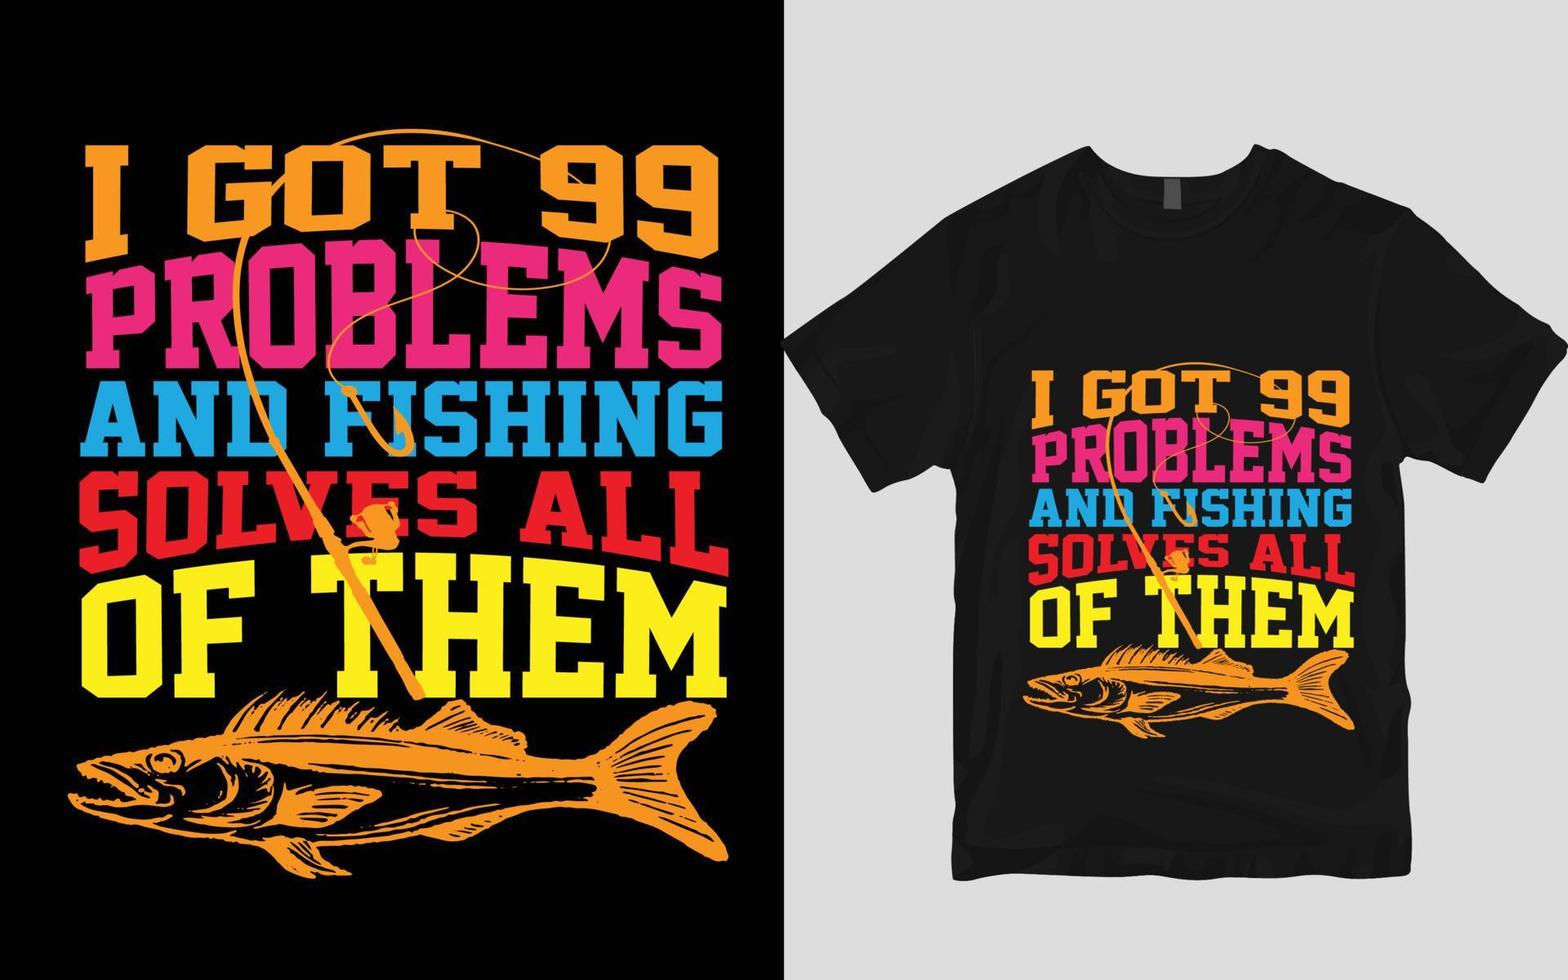 Fishing t shirt design vector